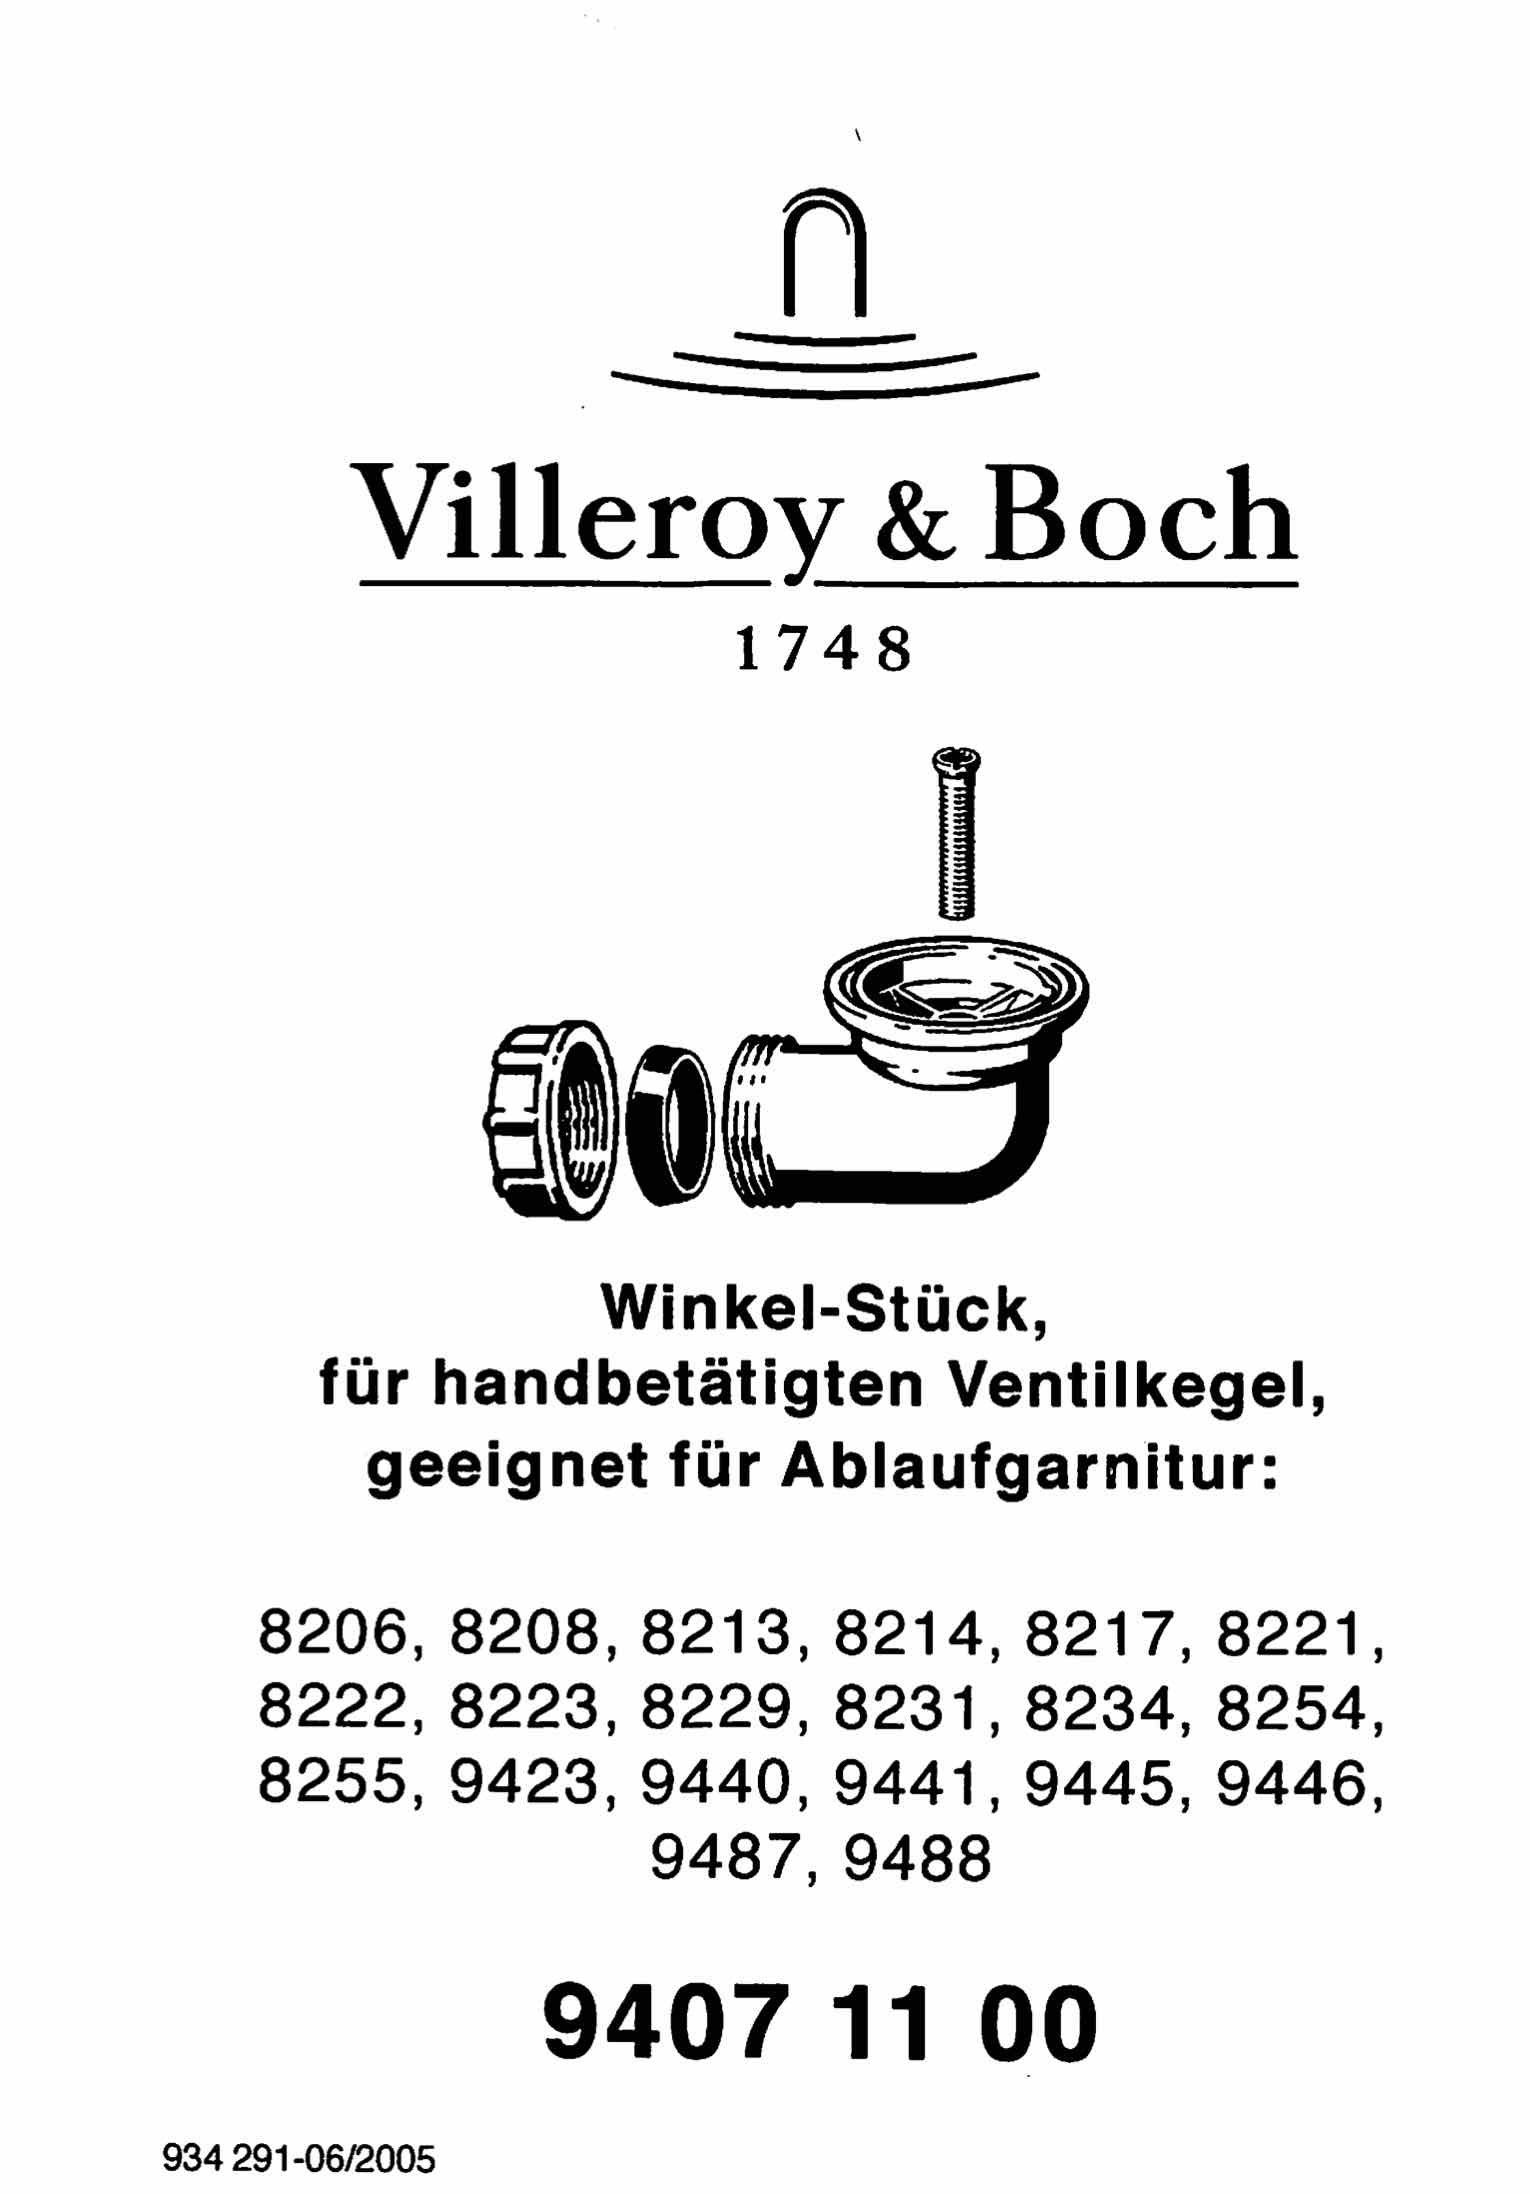 Villeroy & Boch handbetätigten Küchen Boch & Winkelstück Einbauspüle Villeroy Ventilkegel Profi